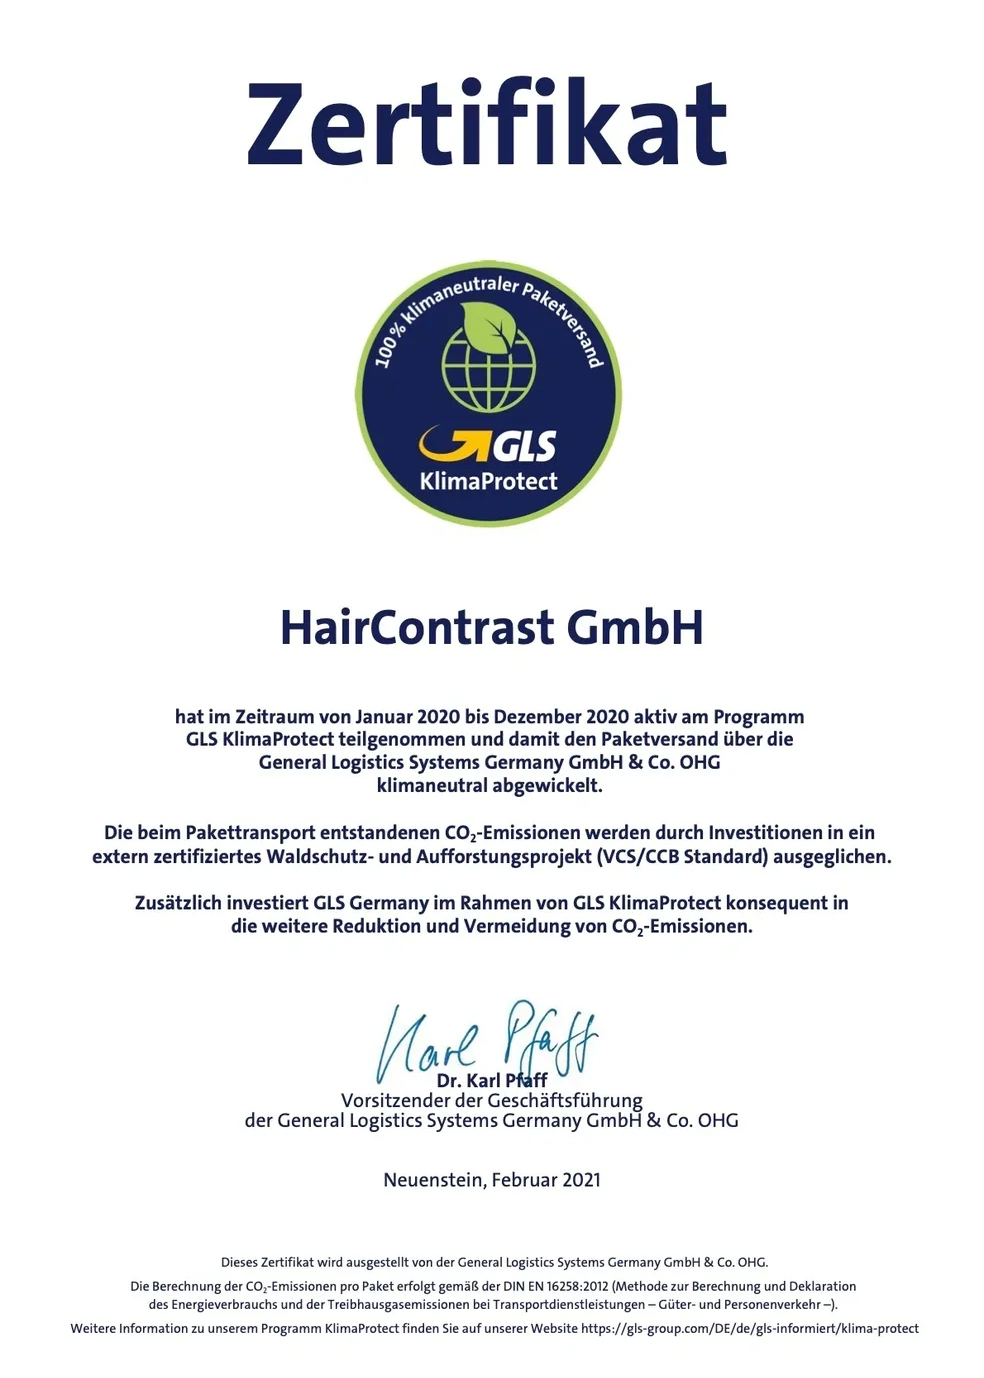 GLS Zertifikat Klimaprotect 2020 für Haircontrast